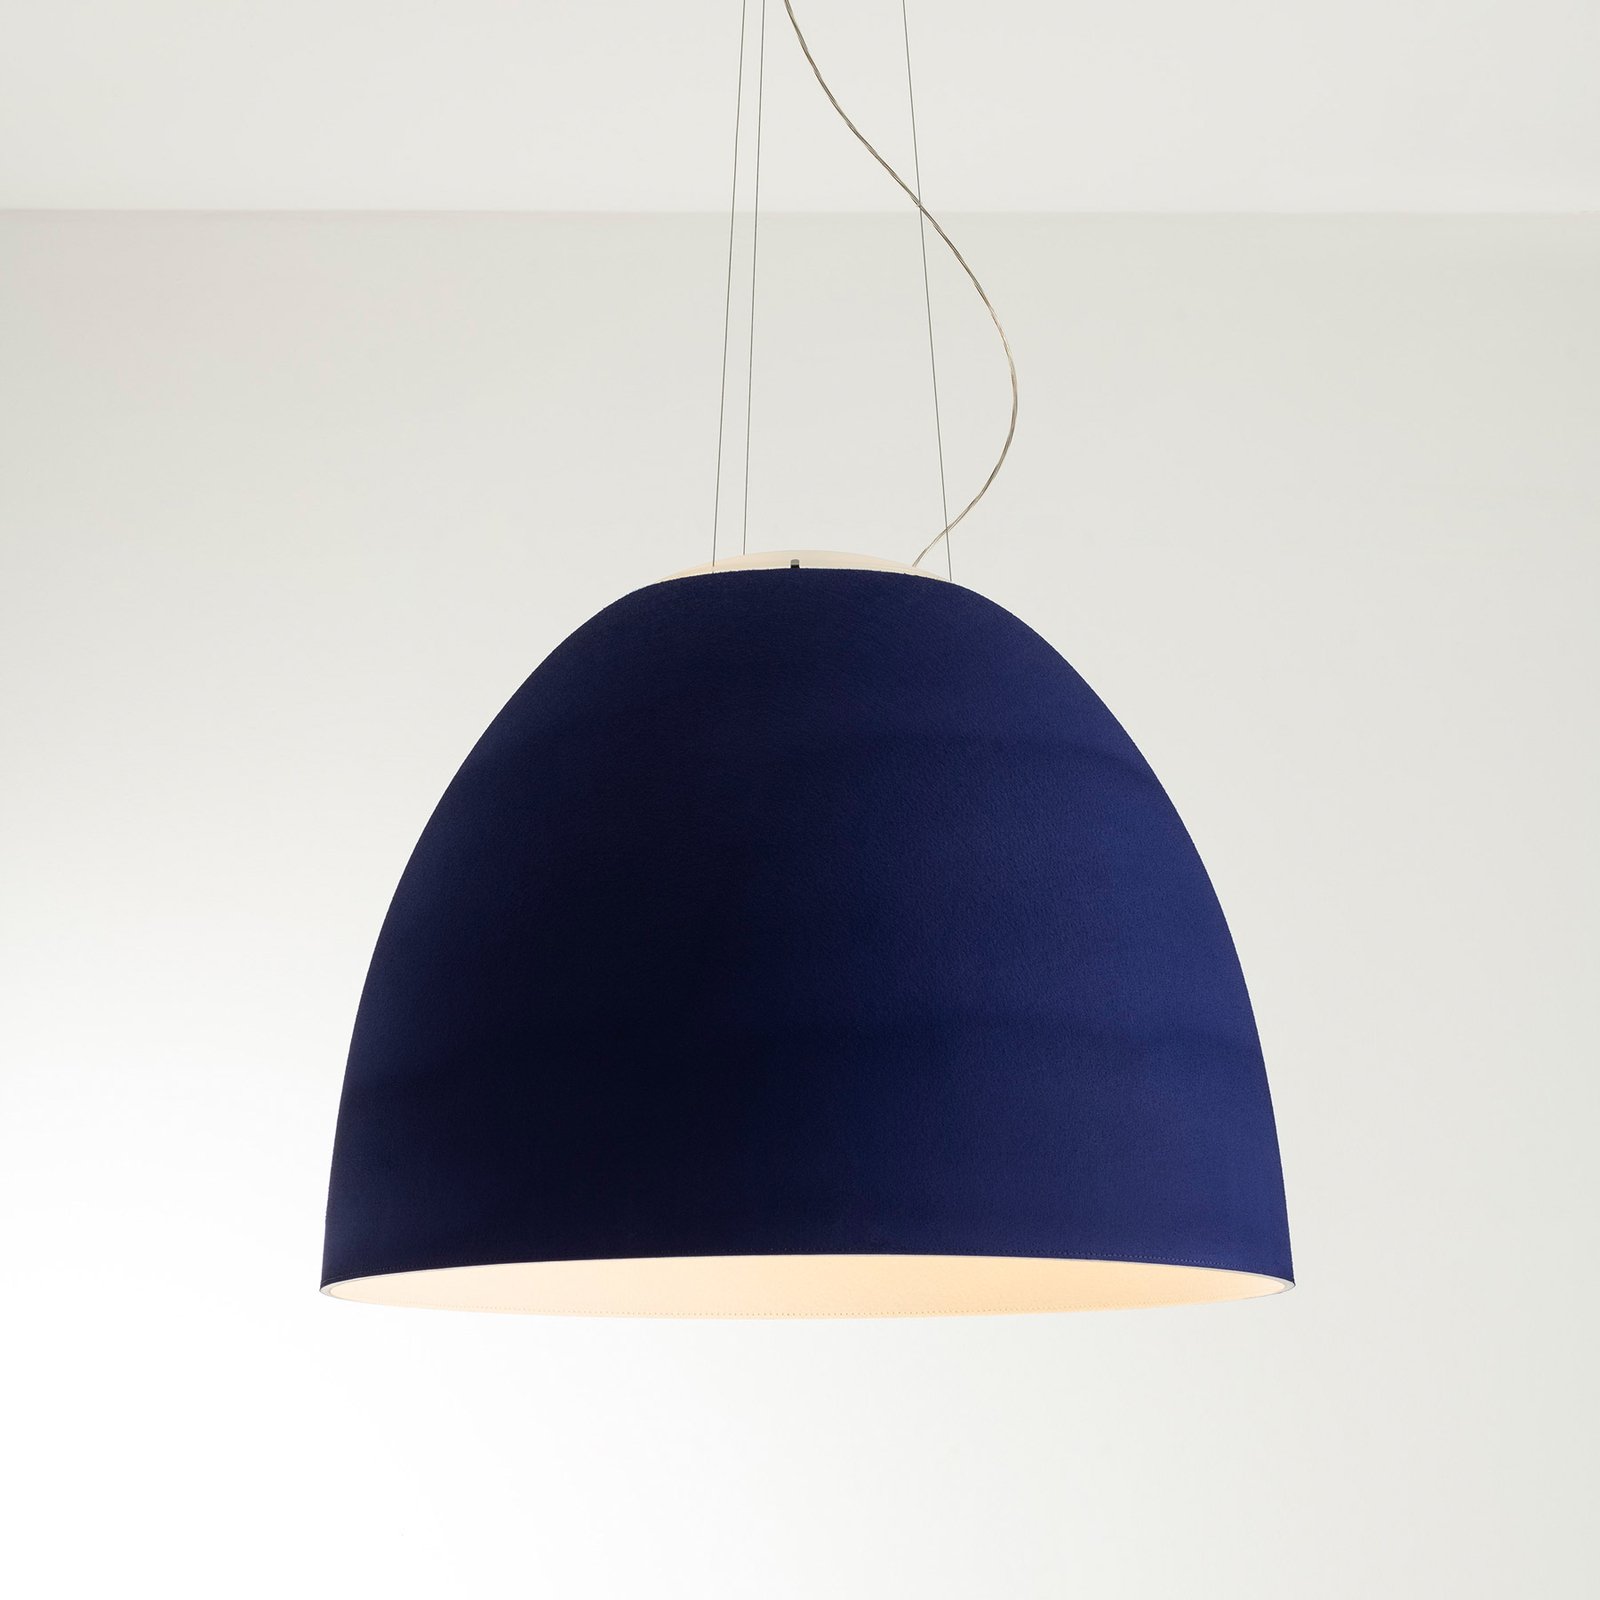 Artemide Nur Acoustic LED viseća svjetiljka, plava